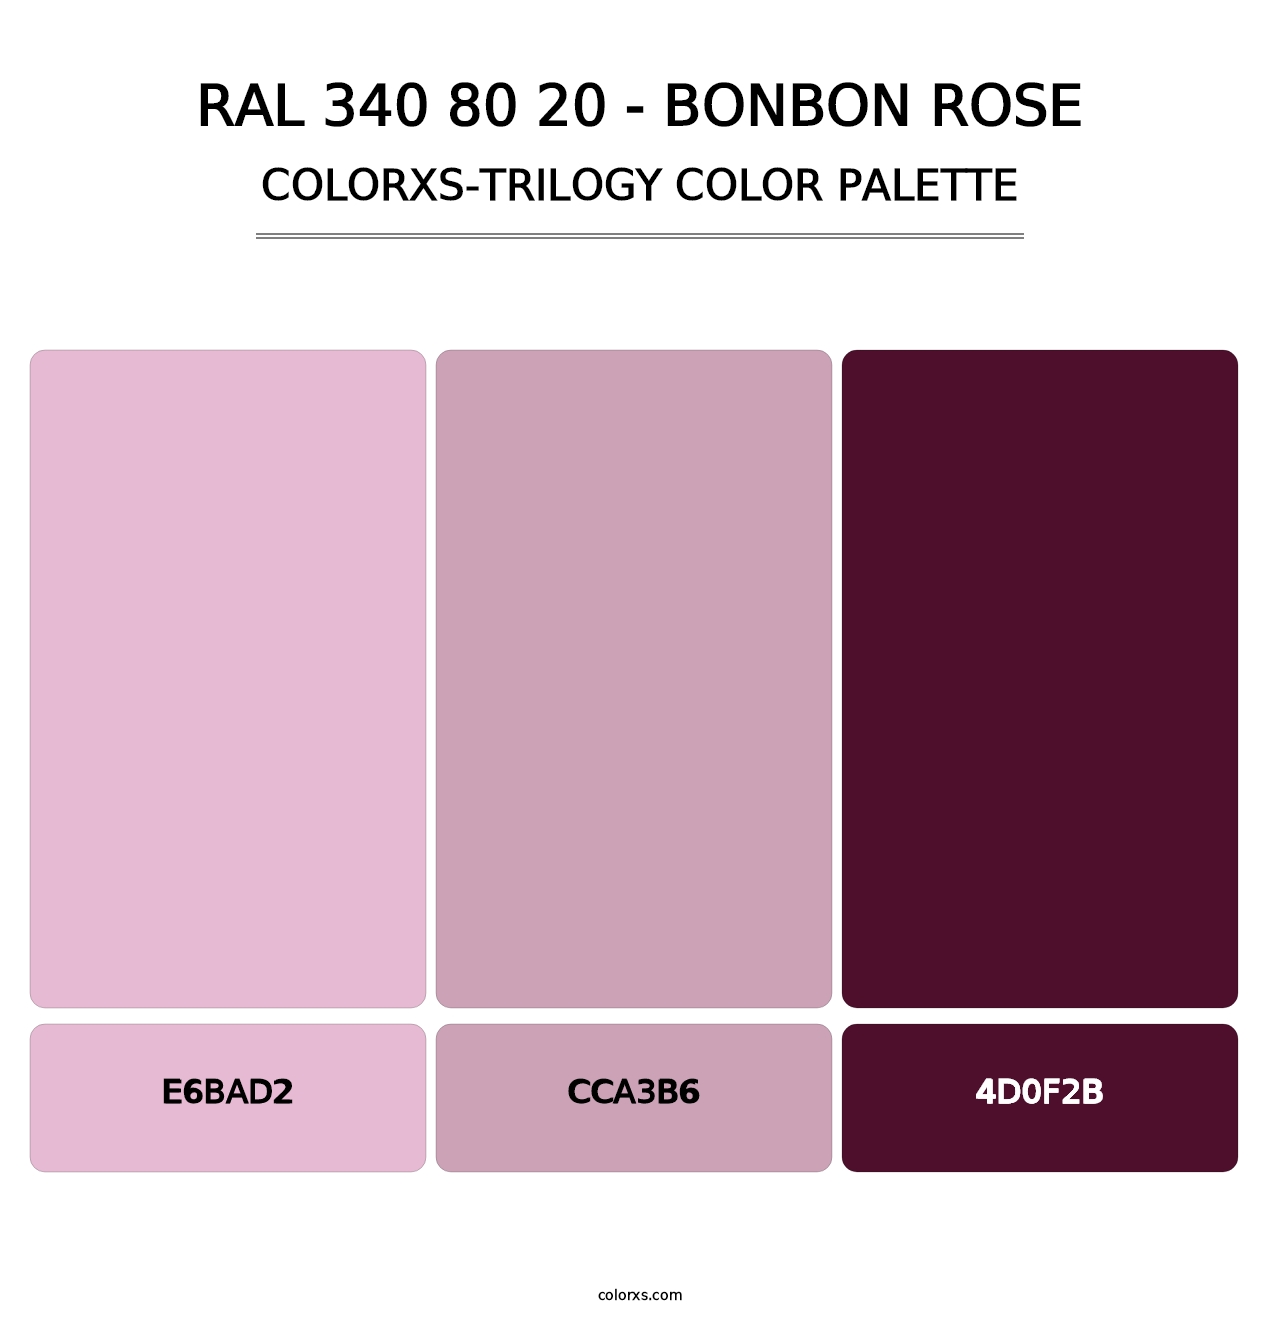 RAL 340 80 20 - Bonbon Rose - Colorxs Trilogy Palette